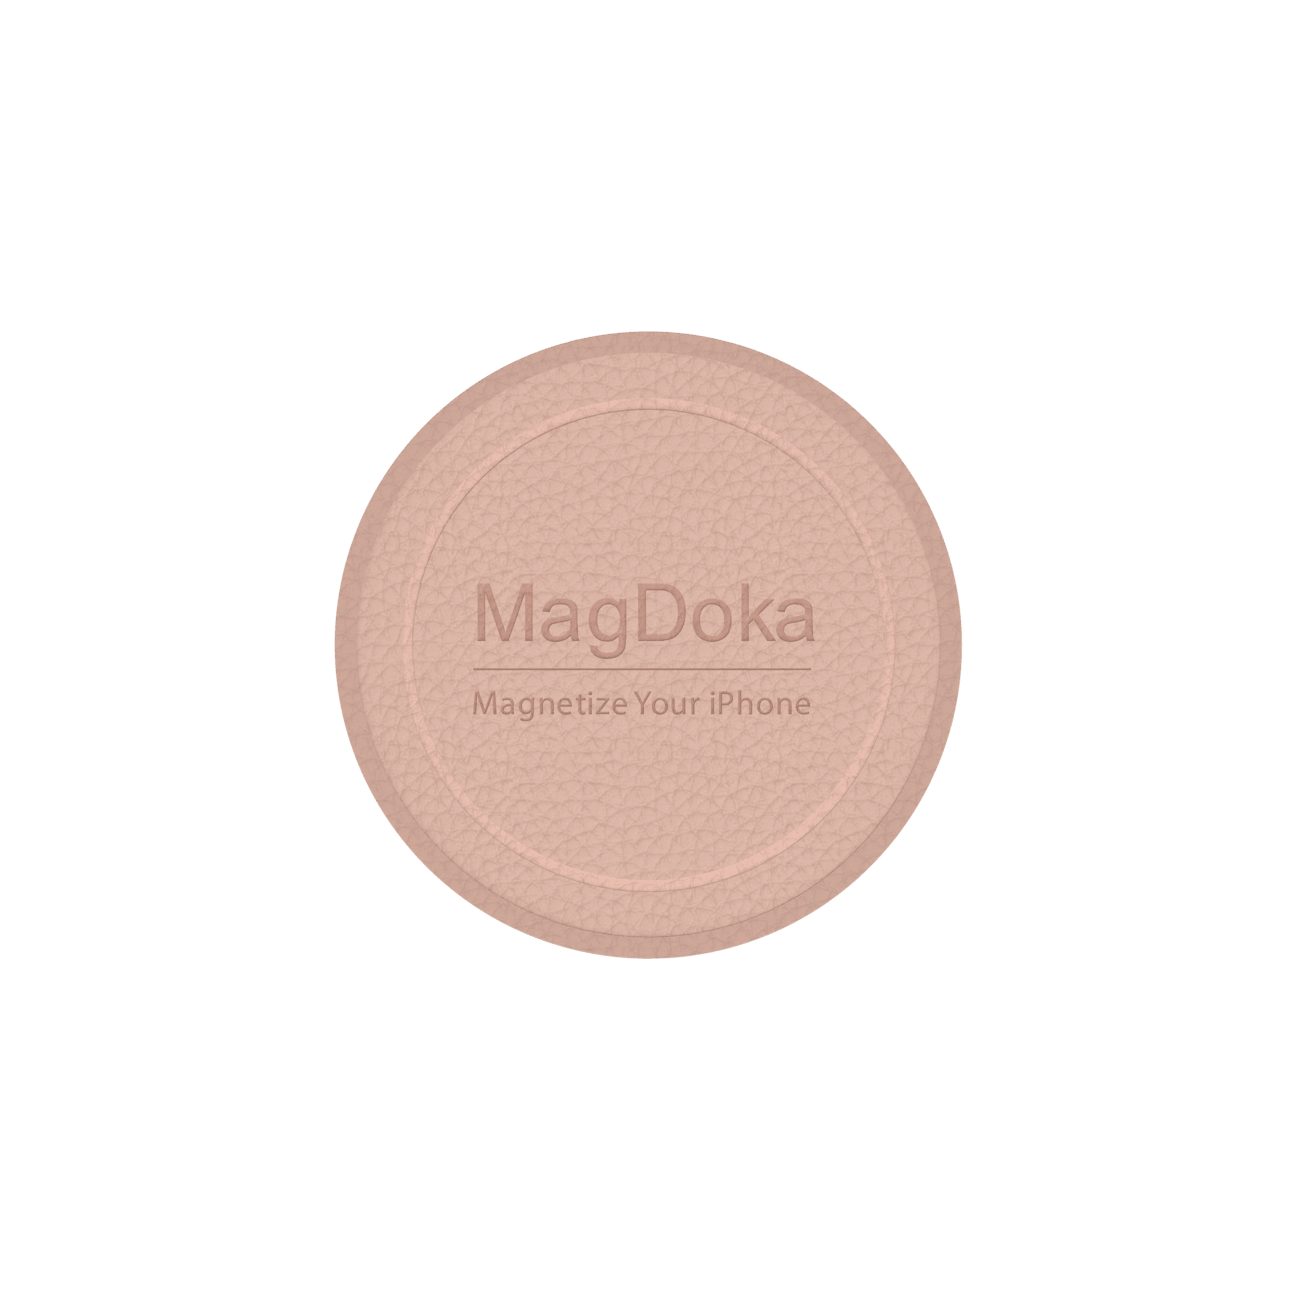 MagDoka Magnetic Adhesive Pad | MagSafe - Grab Your Gadget